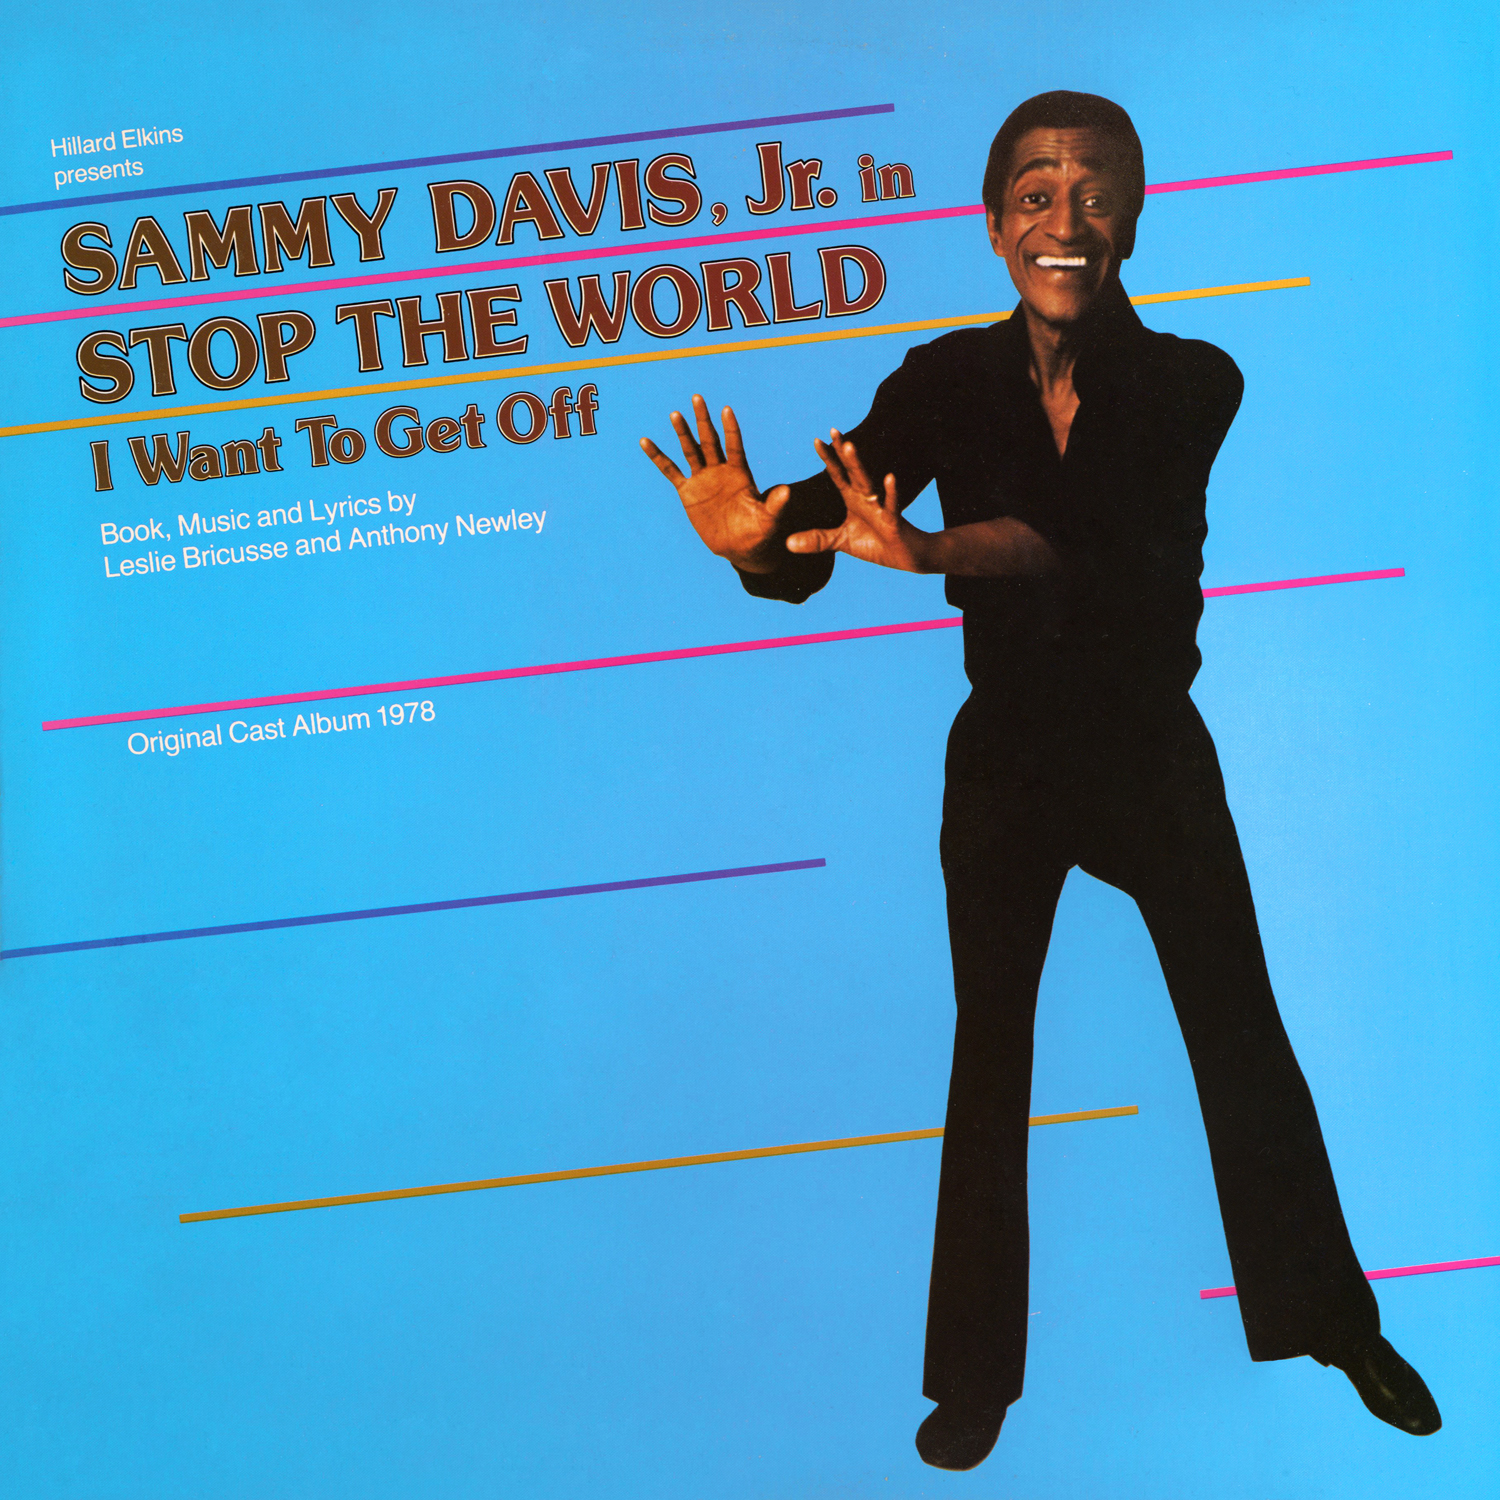 Sammy Davis, Jr. “Stop The World I Want To Get Off” Original Cast